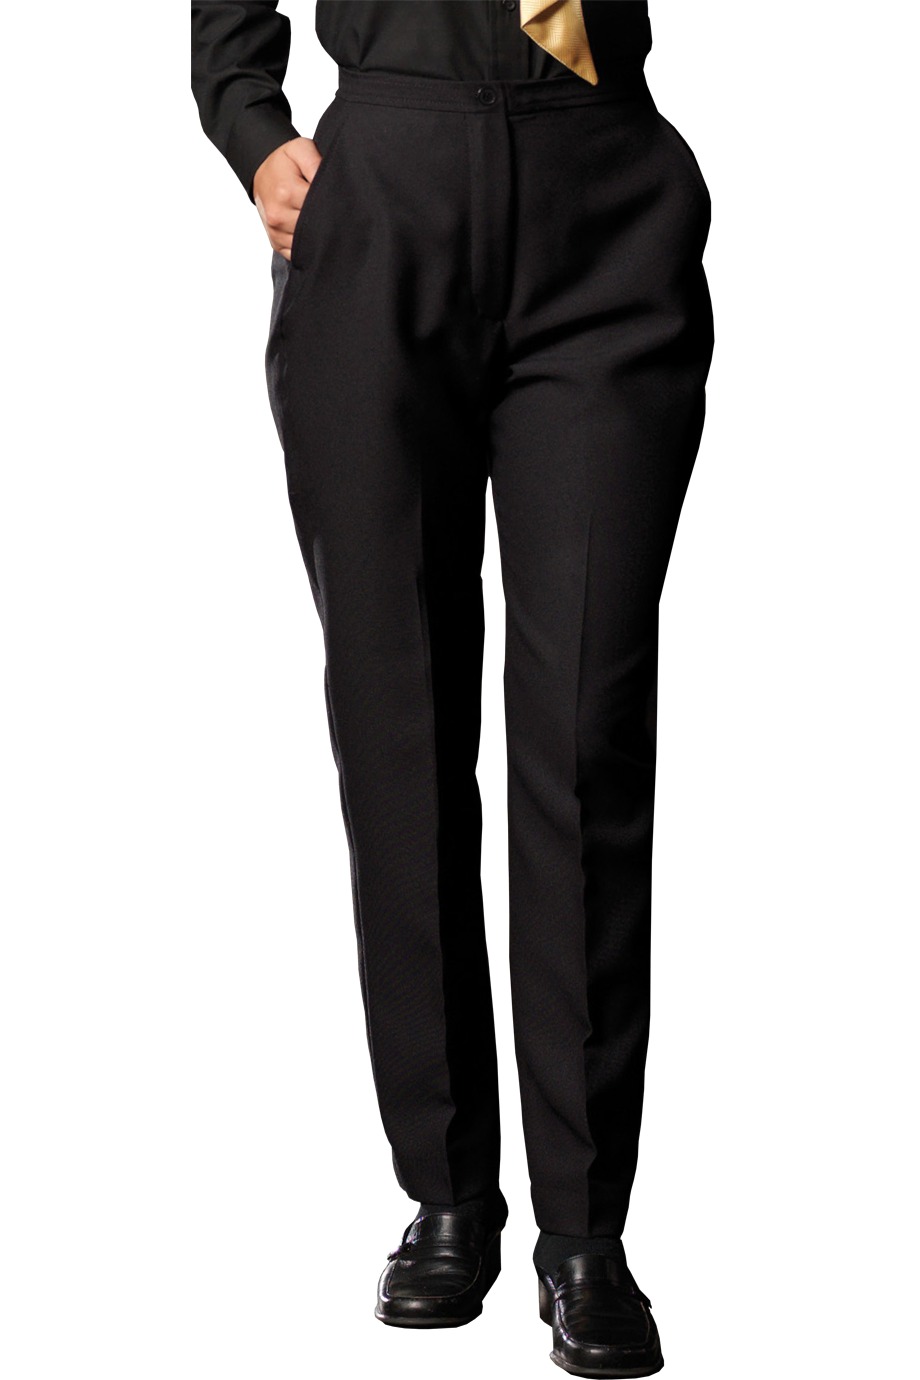 Edwards Garment 8279 - Women's Polyester Flat Front Pant